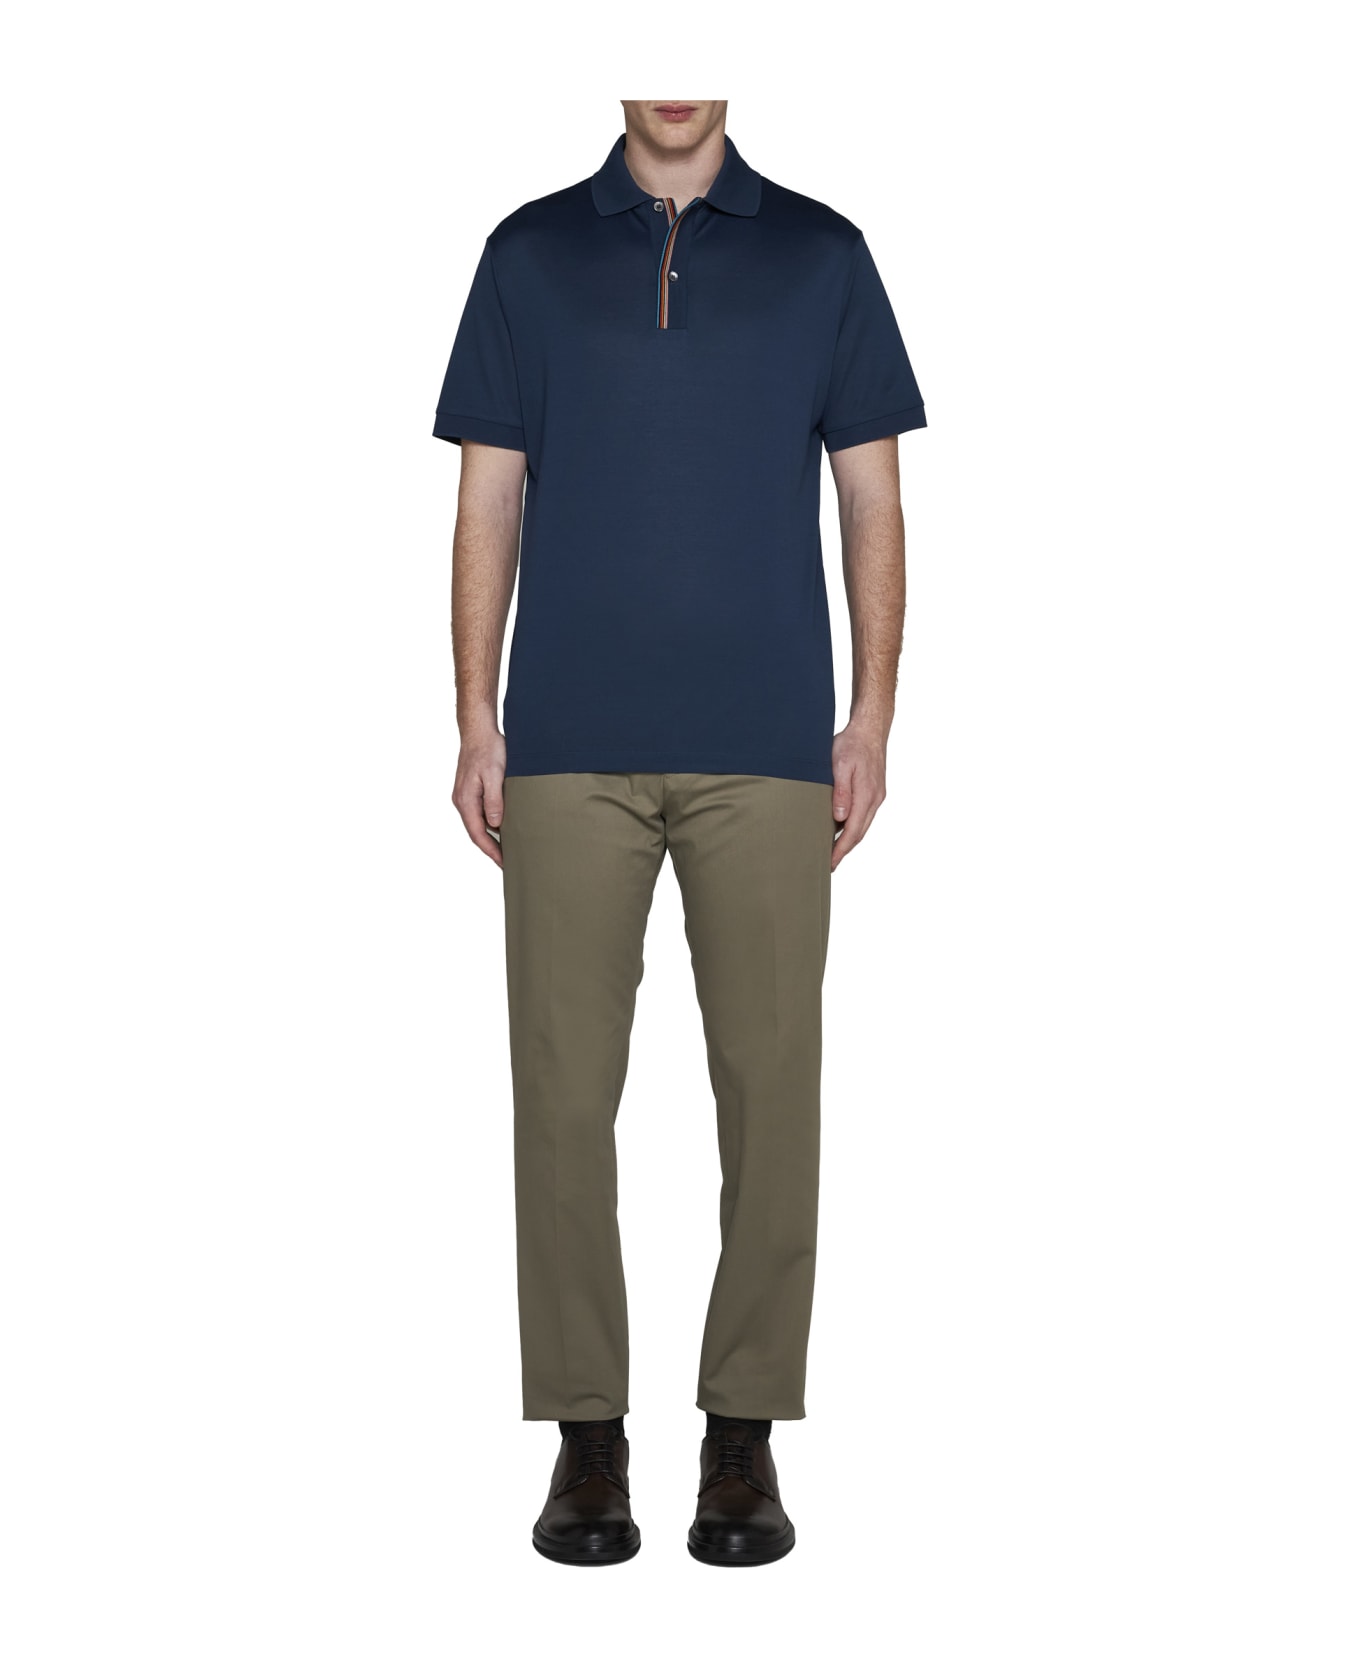 Paul Smith Polo Shirt - Navy